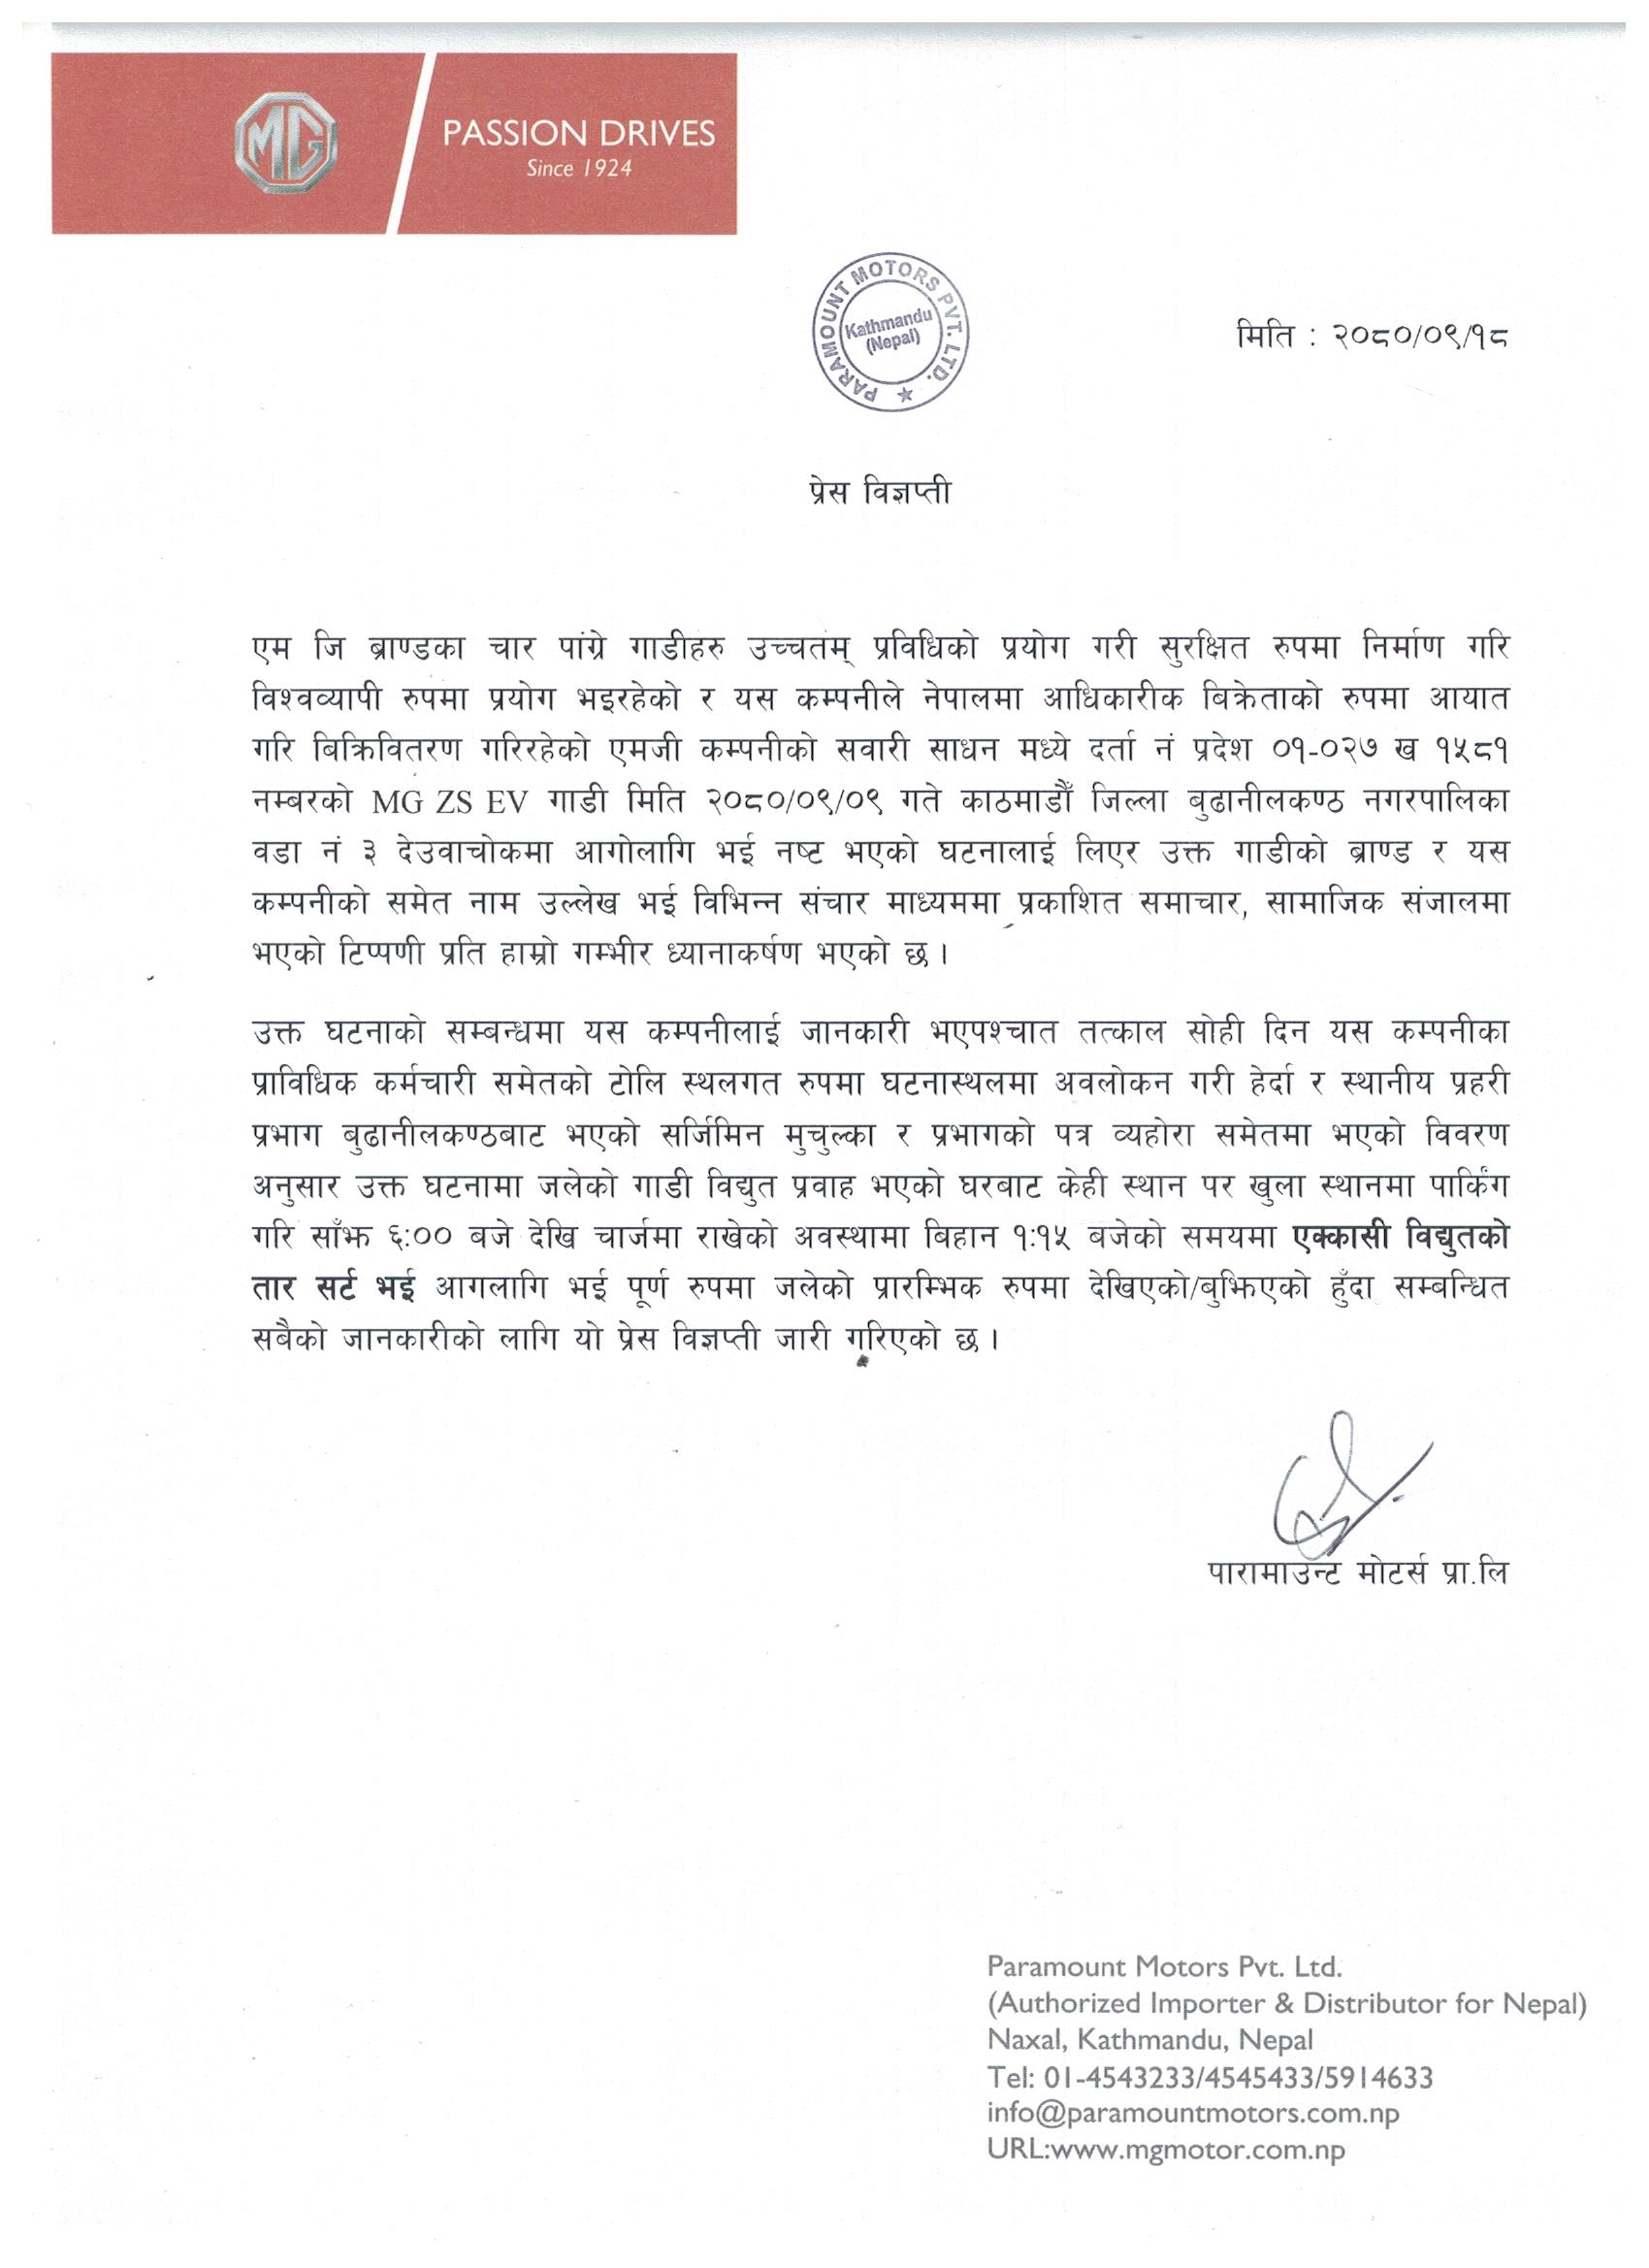 MG Nepal Press Release